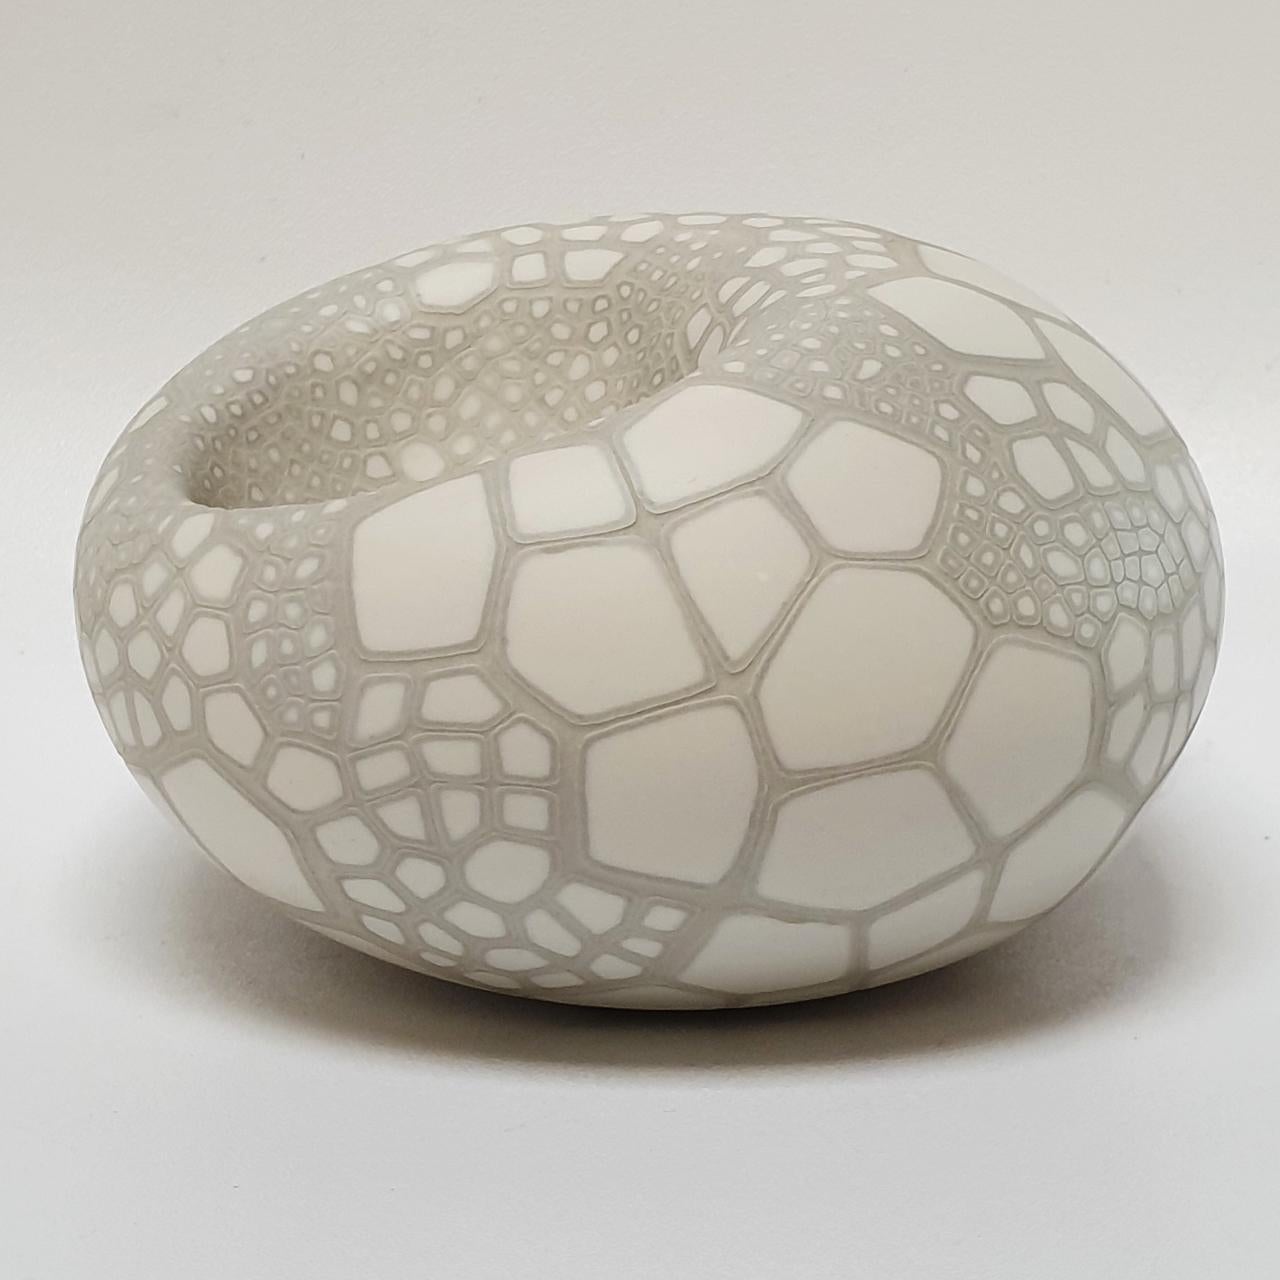 Petra Benndorf Abstract Sculpture - Objekt gemustert - contemporary modern abstract organic ceramic sculpture object